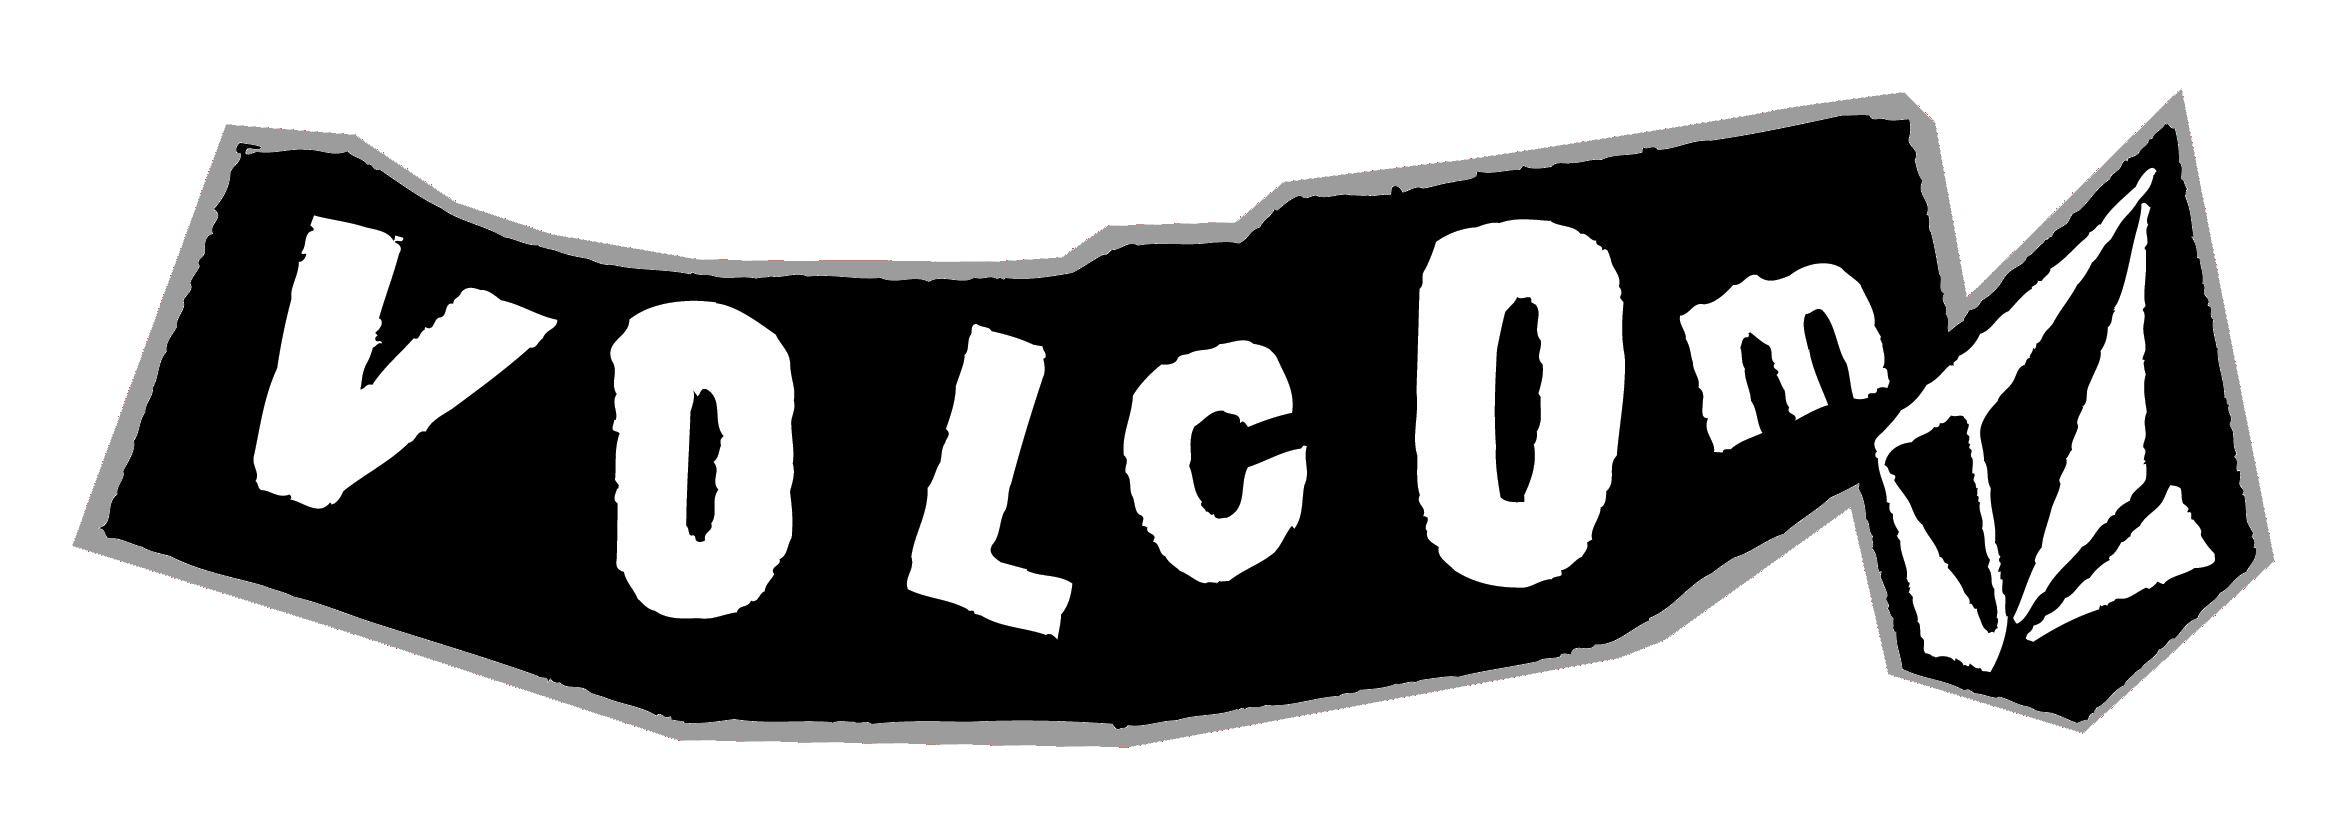 Volcom logo using pictorial and letterform. logo design